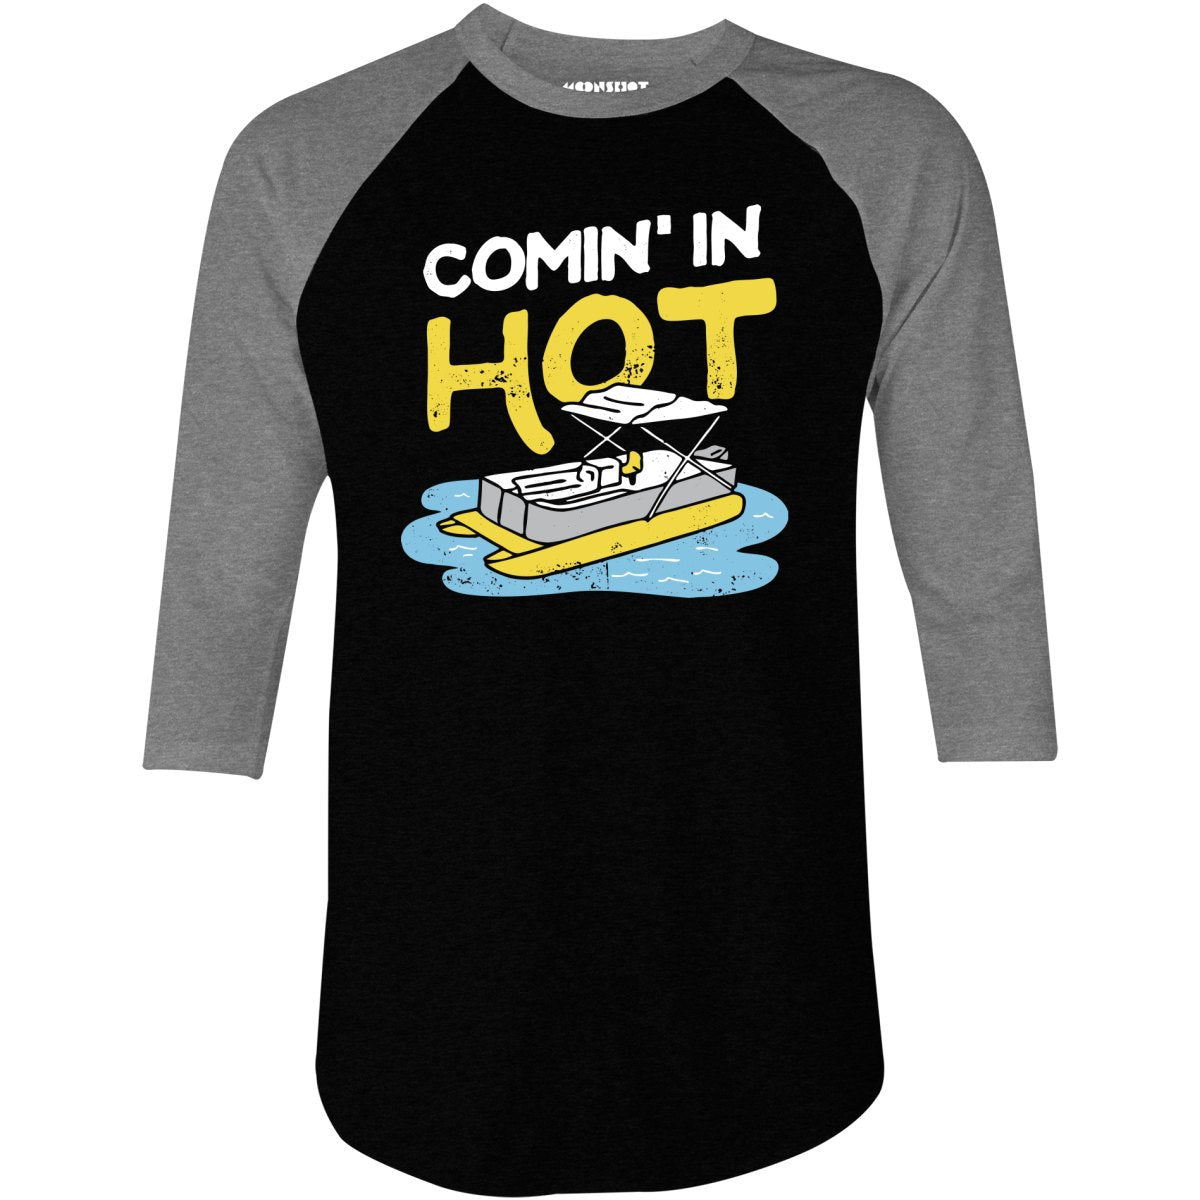 Comin' in Hot - 3/4 Sleeve Raglan T-Shirt